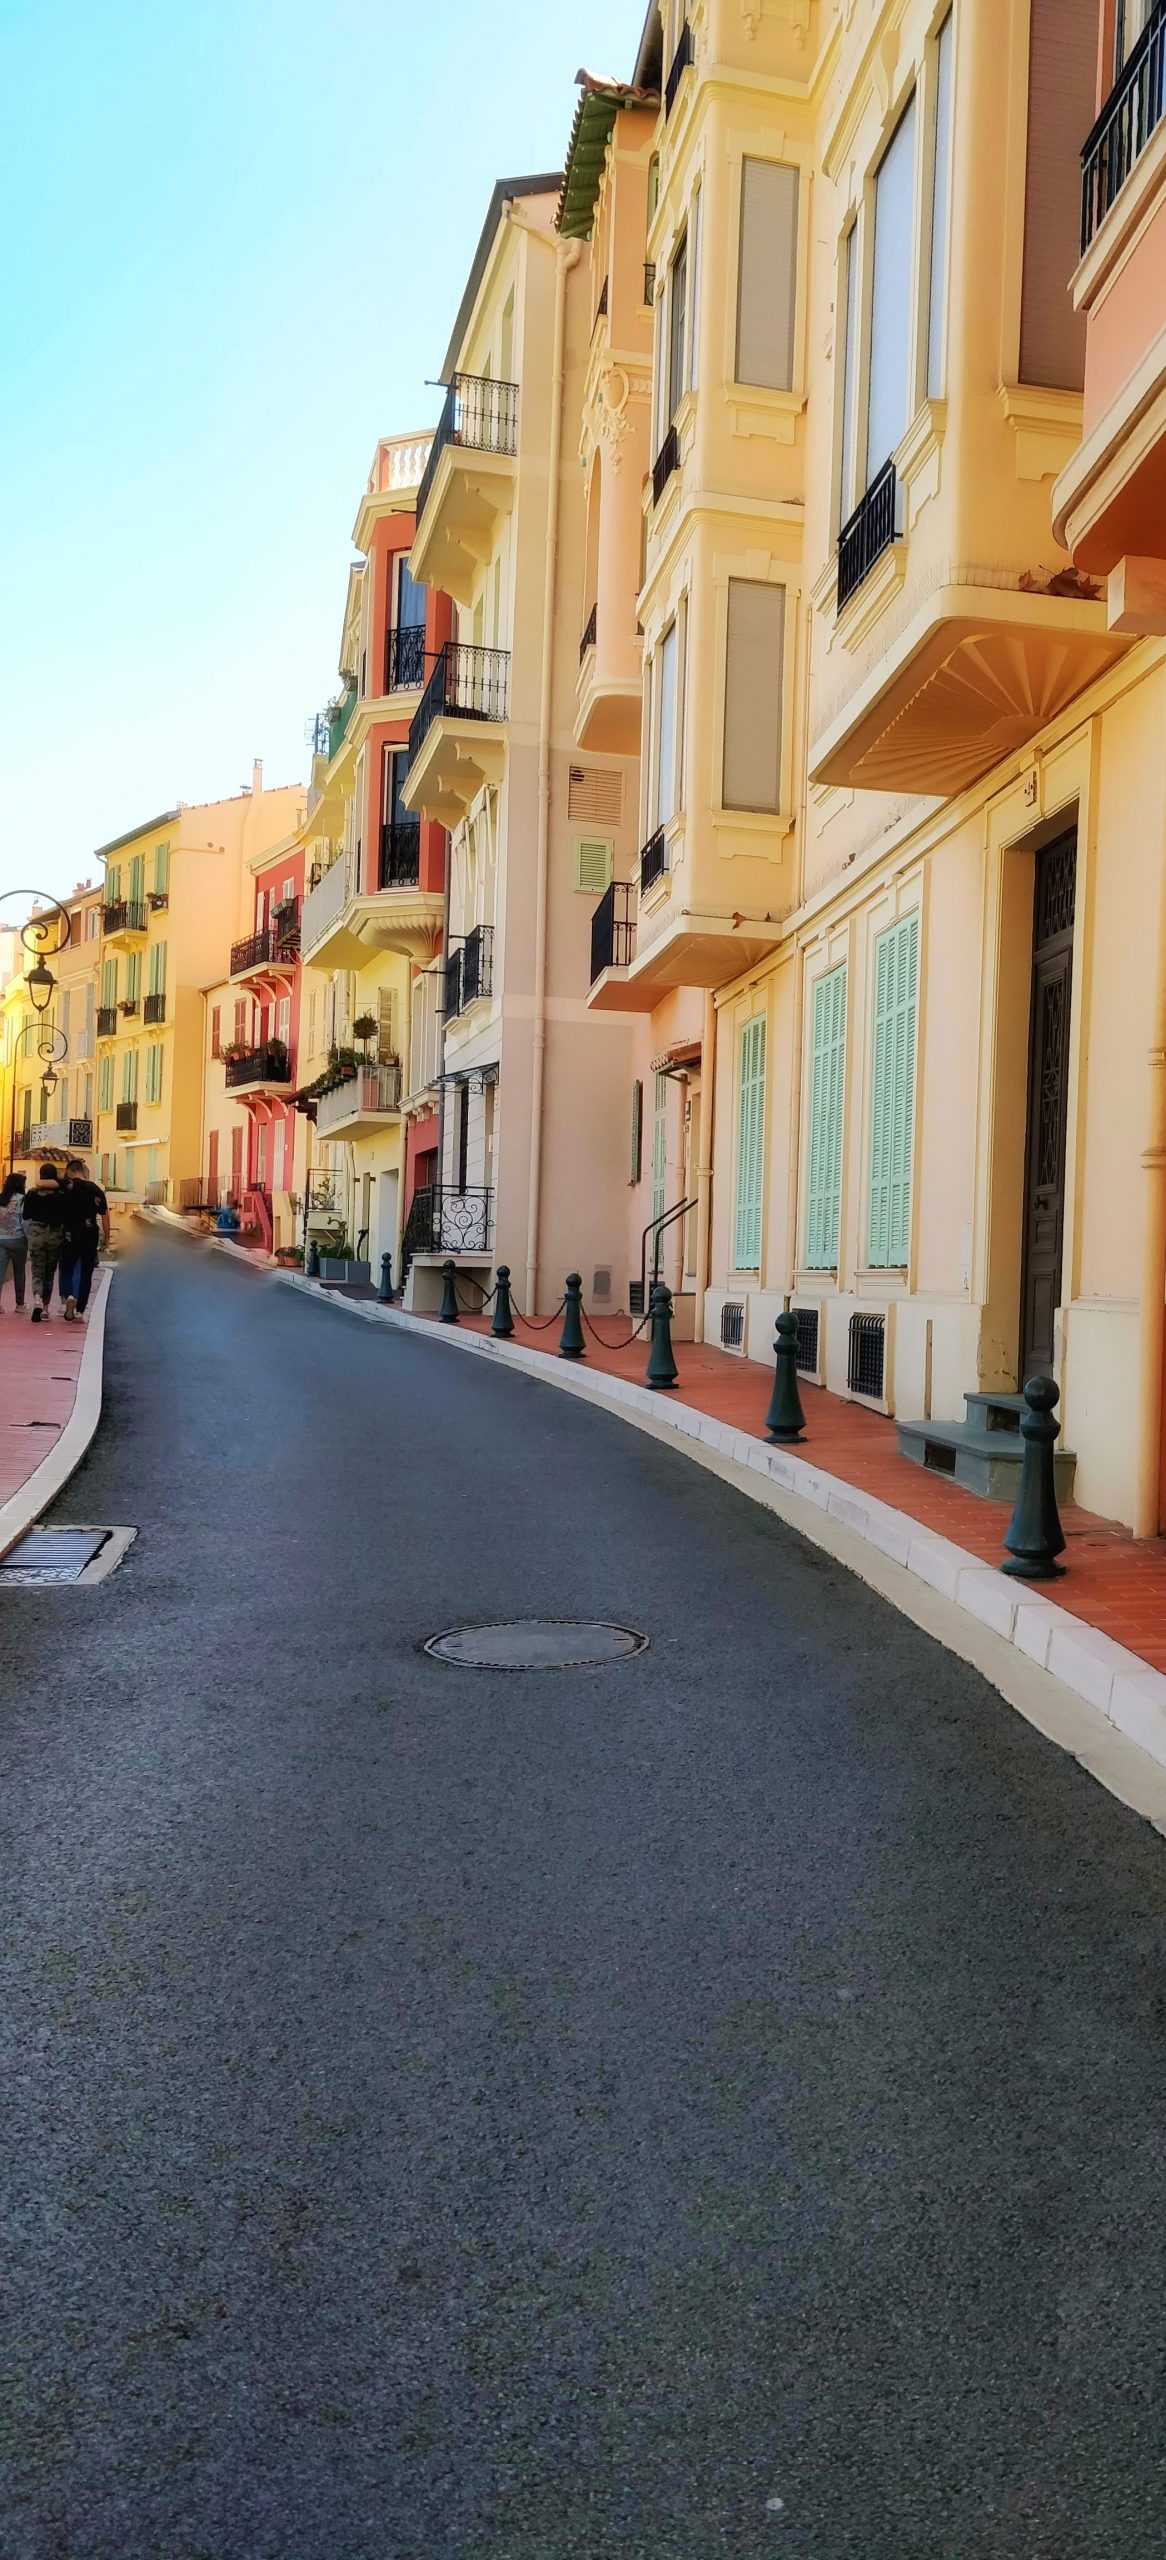 South Of France – Monaco : Famous Roads